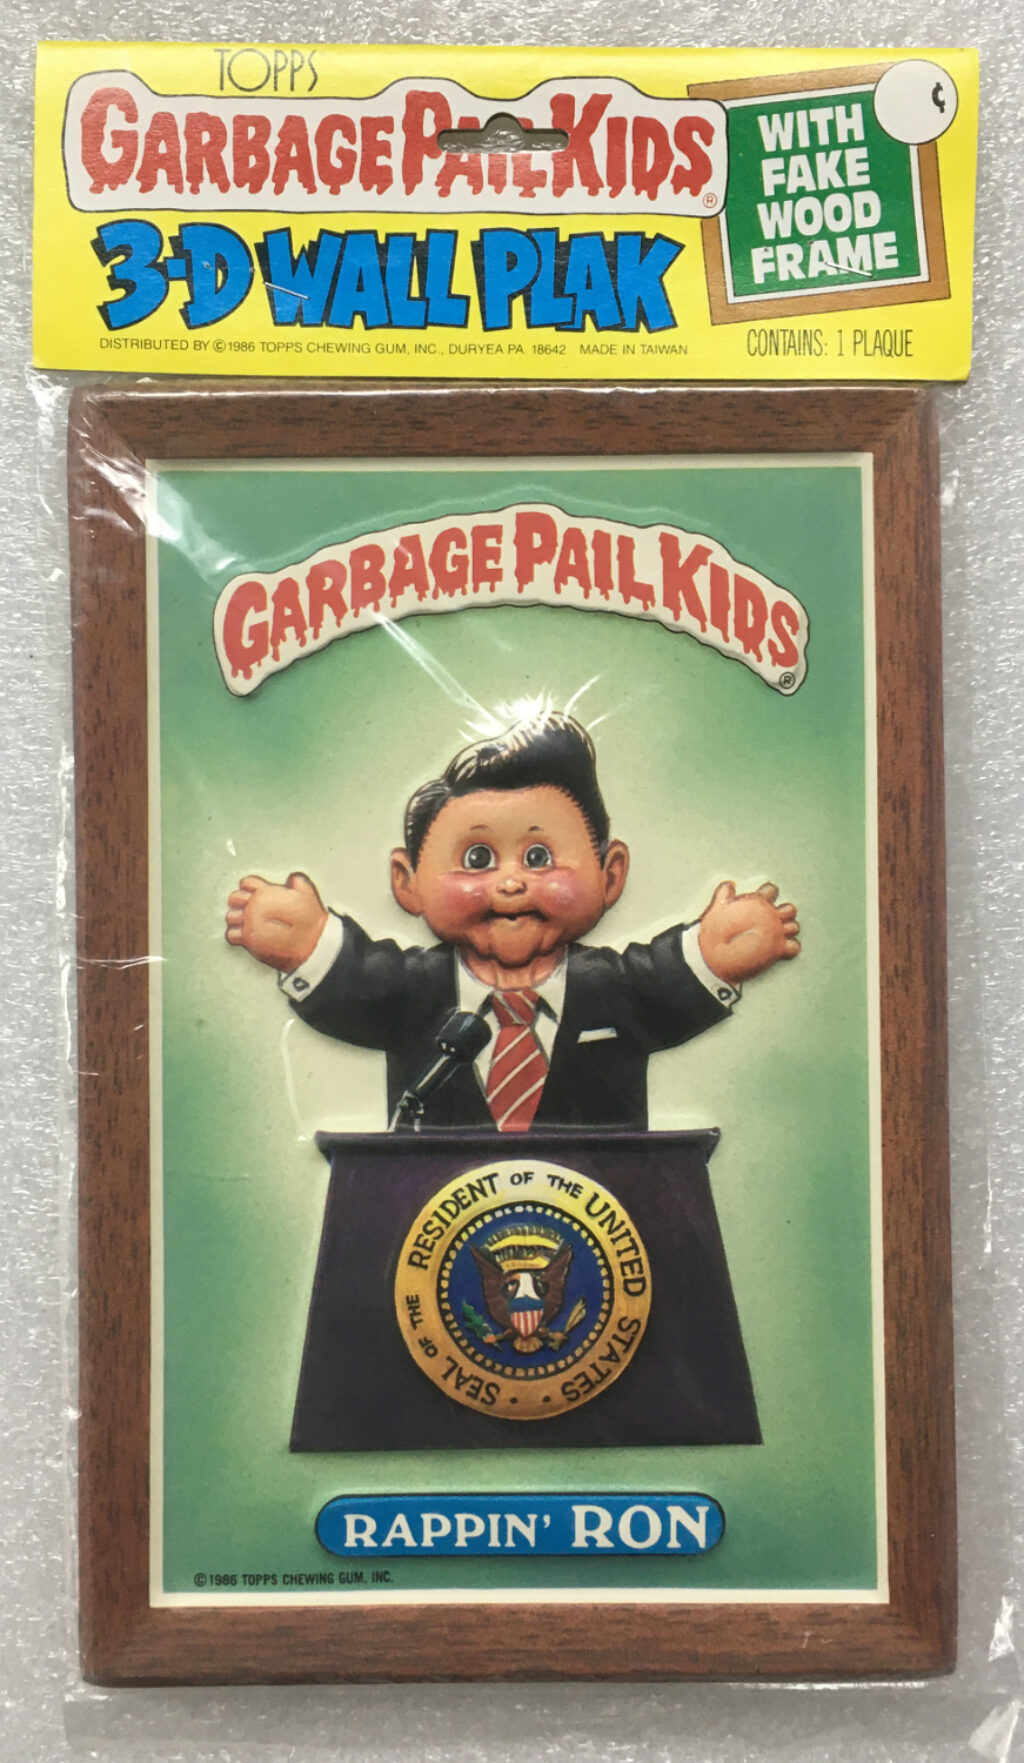 MIP 1986 Garbage Pail Kids (GPK) Rappin' Ron 3-D Wall Plak - Factory Sealed